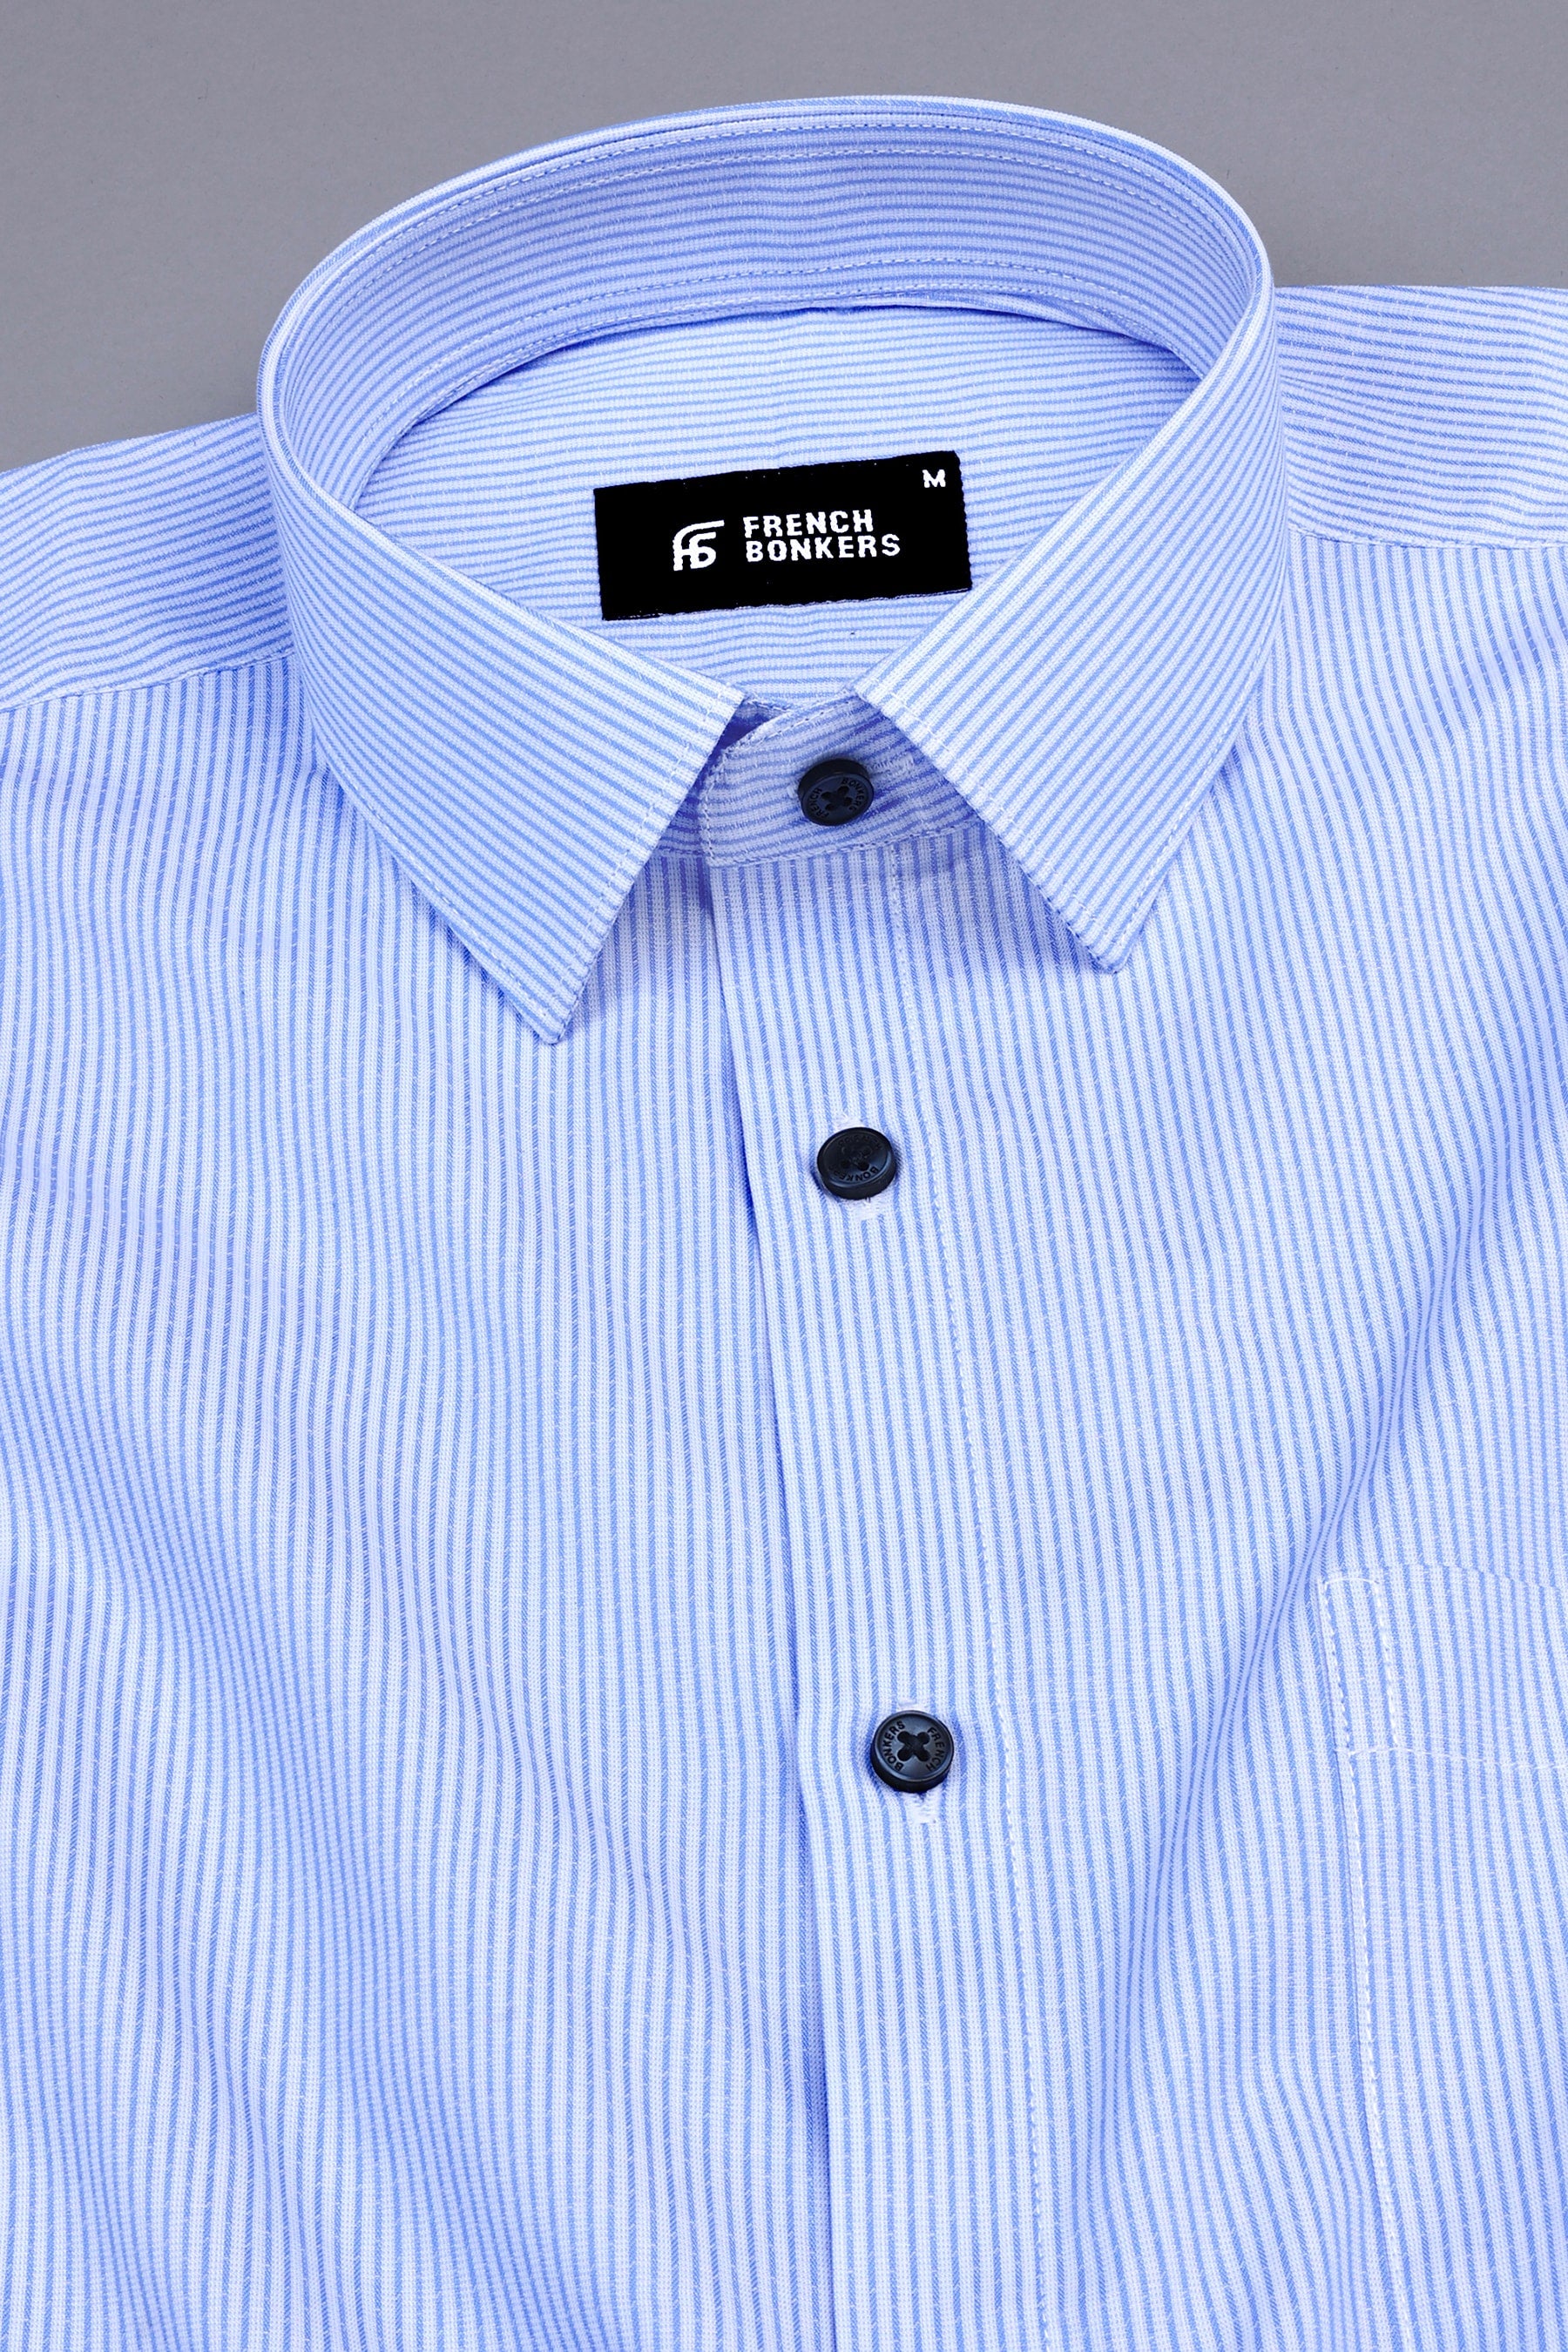 Baby blue pin stripe cotton shirt